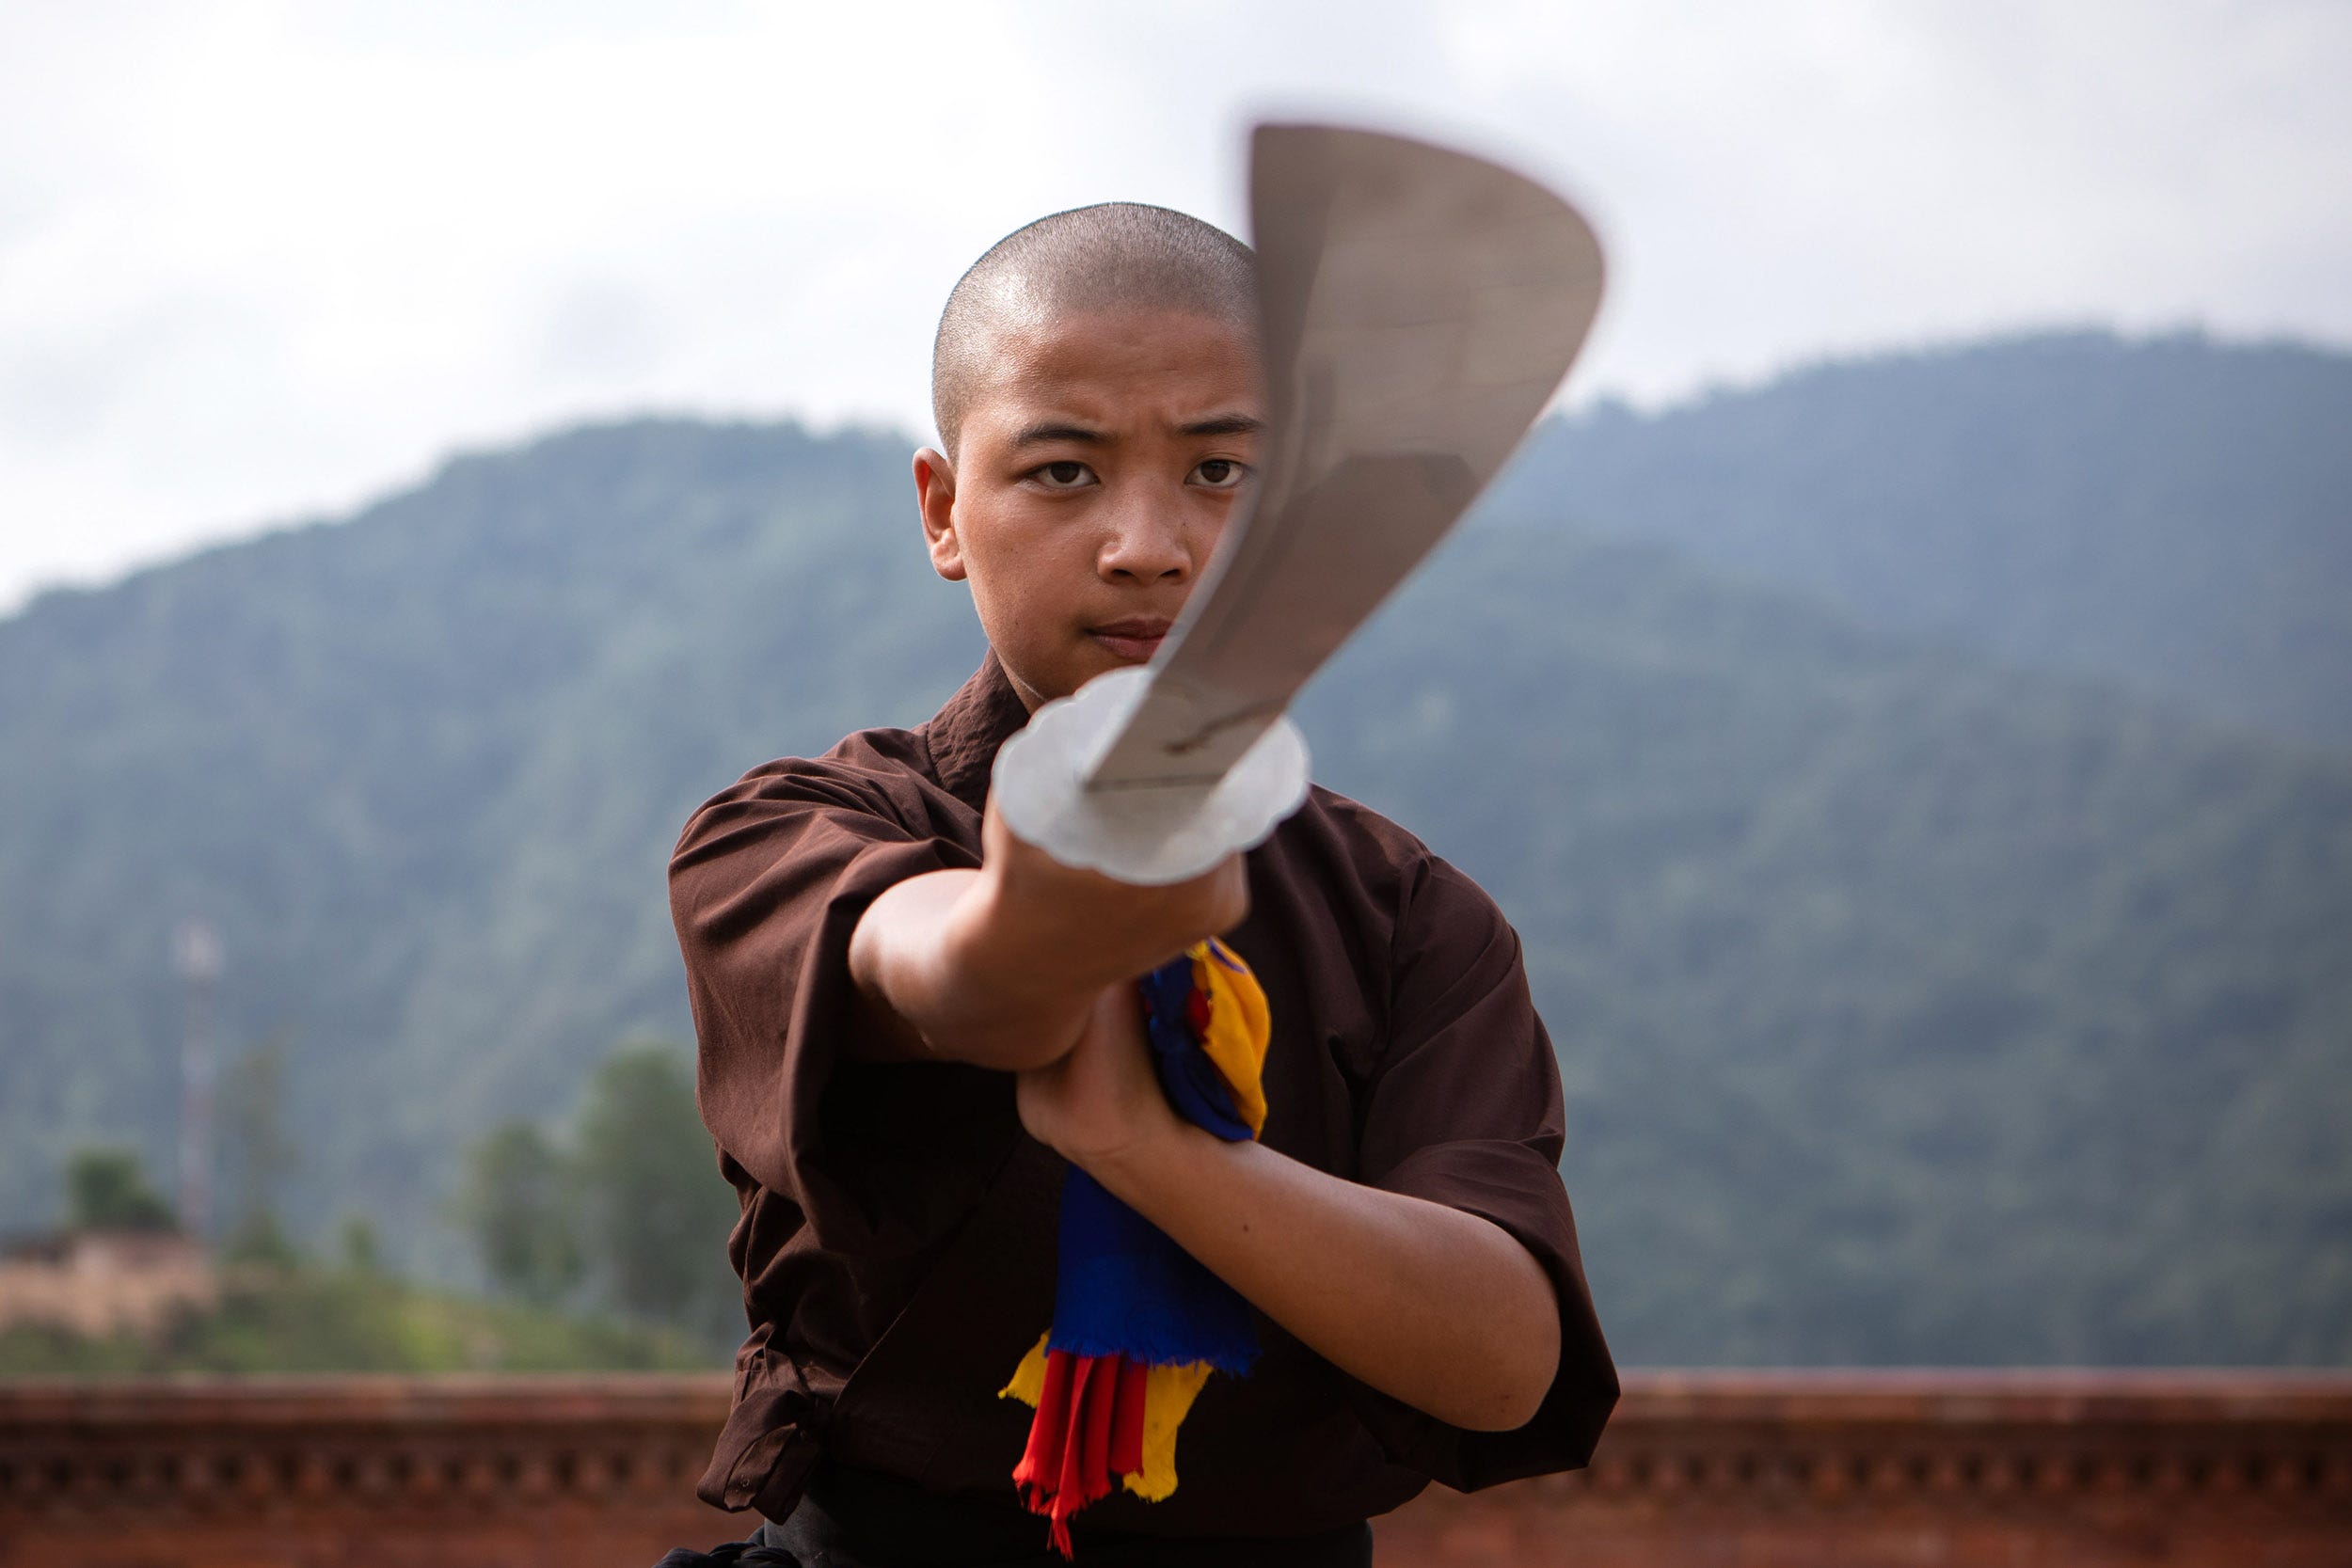 The Kung Fu Nuns of Kathmandu